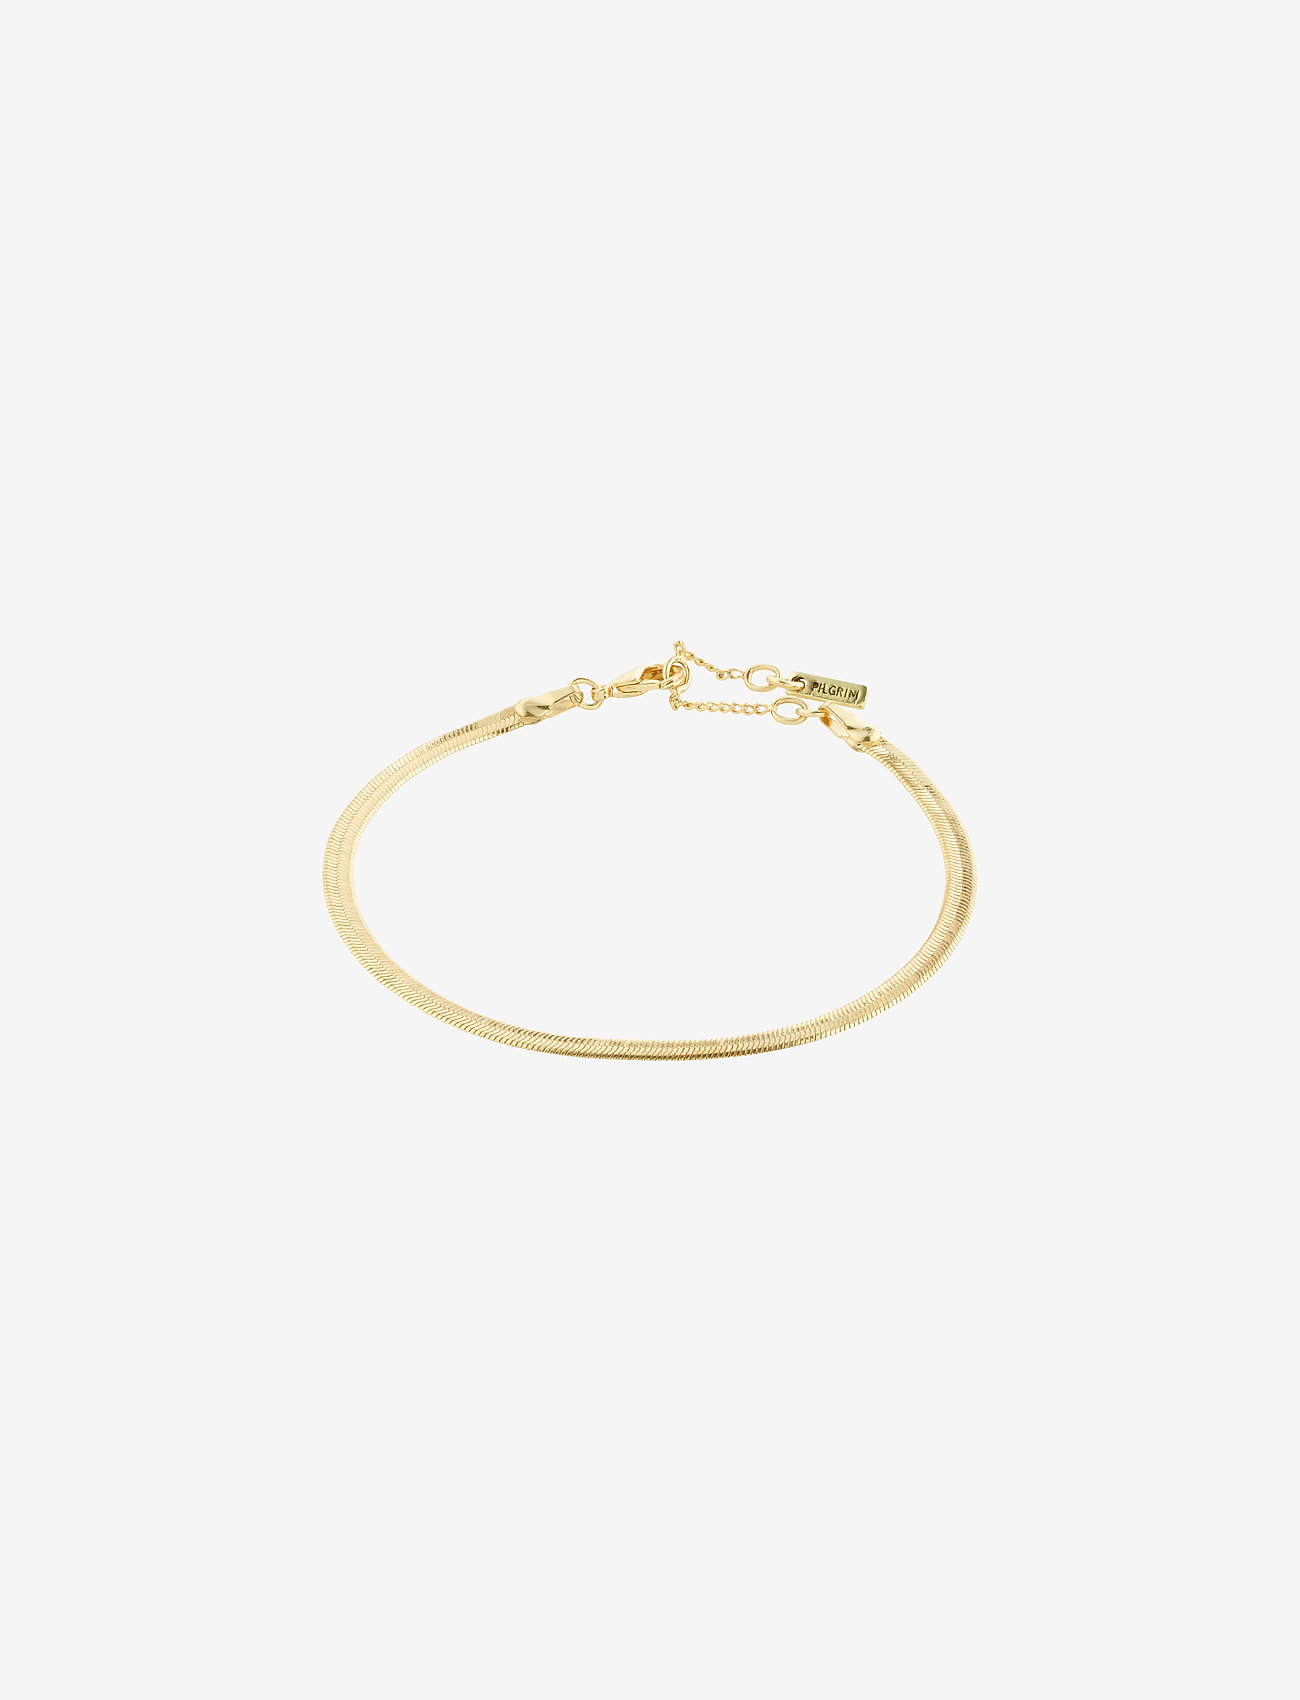 Pilgrim - JOANNA flat snake chain bracelet gold-plated - kettenarmbänder - gold plated - 0